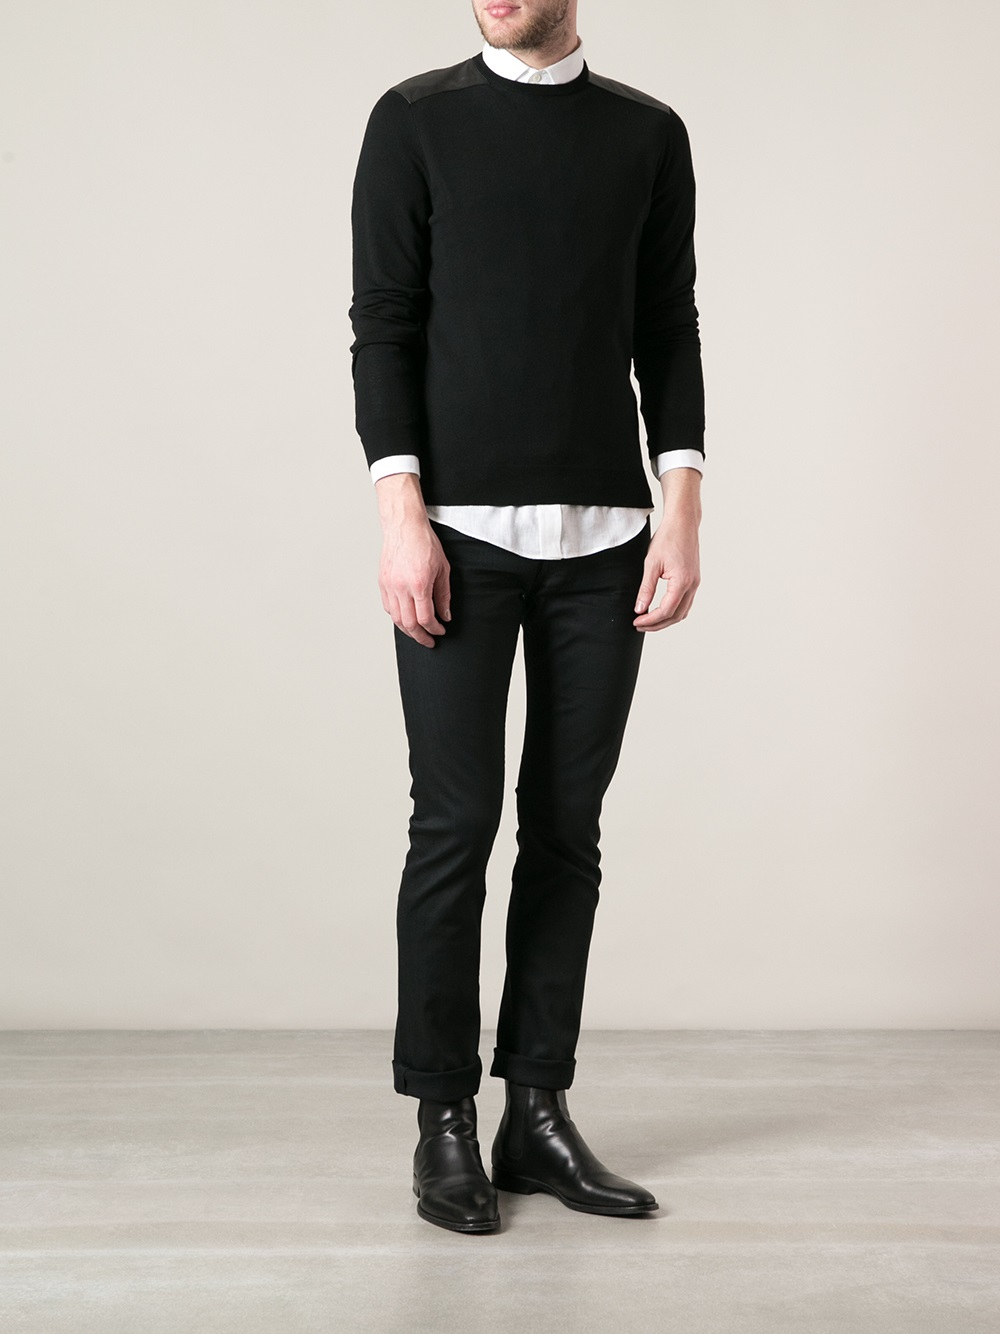 Ralph Lauren Black Label Shoulder Pads Sweater in Black for Men - Lyst